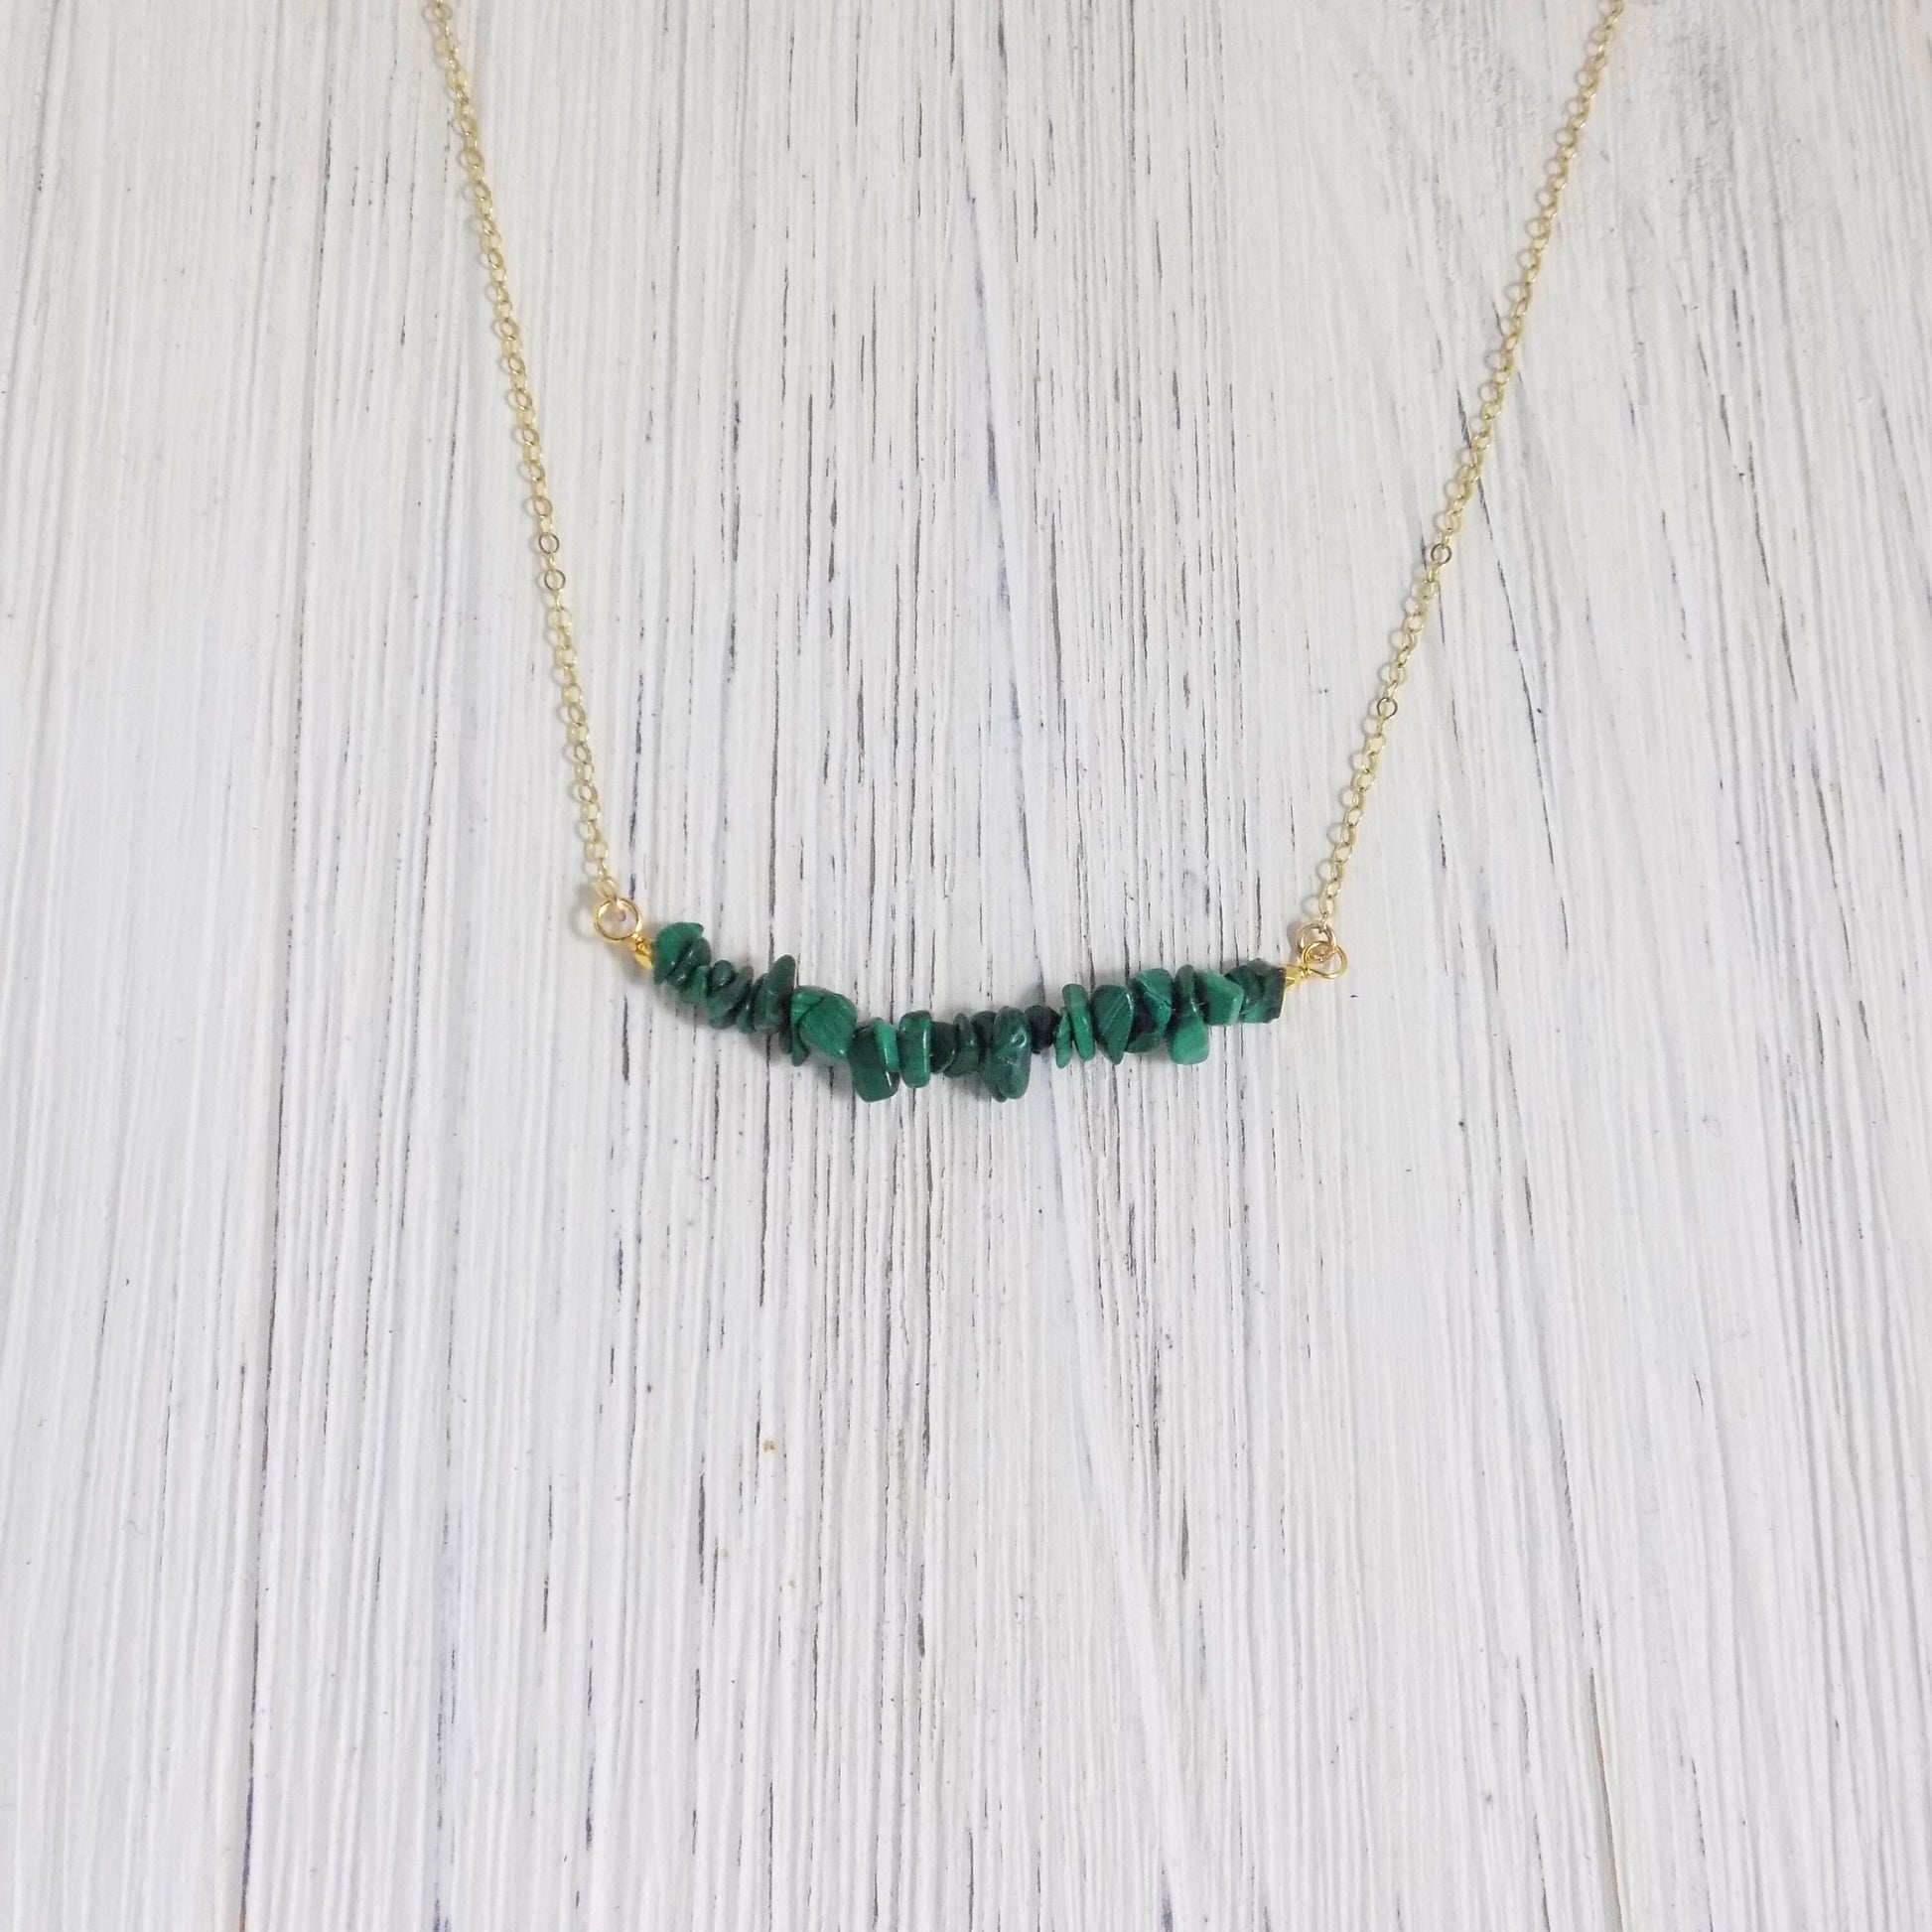 Green Malachite Gemstone Bar Necklace on 14K Gold Filled Chain, M5-332